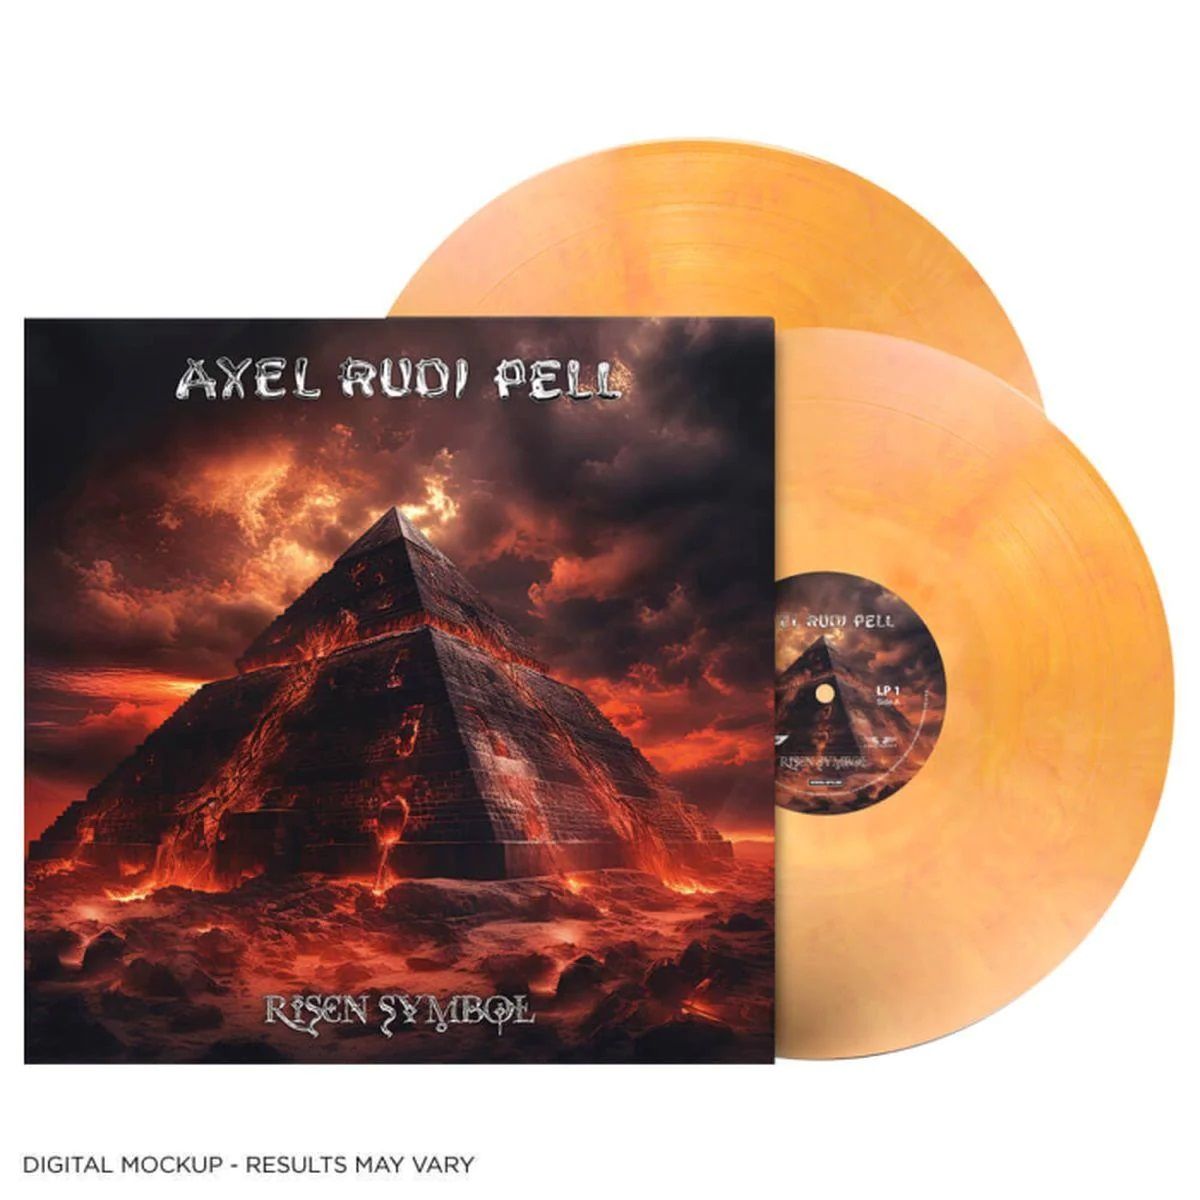 Pell, Axel Rudi - Risen Symbol (2LP Solid Orange vinyl) - Vinyl - New - PRE-ORDER